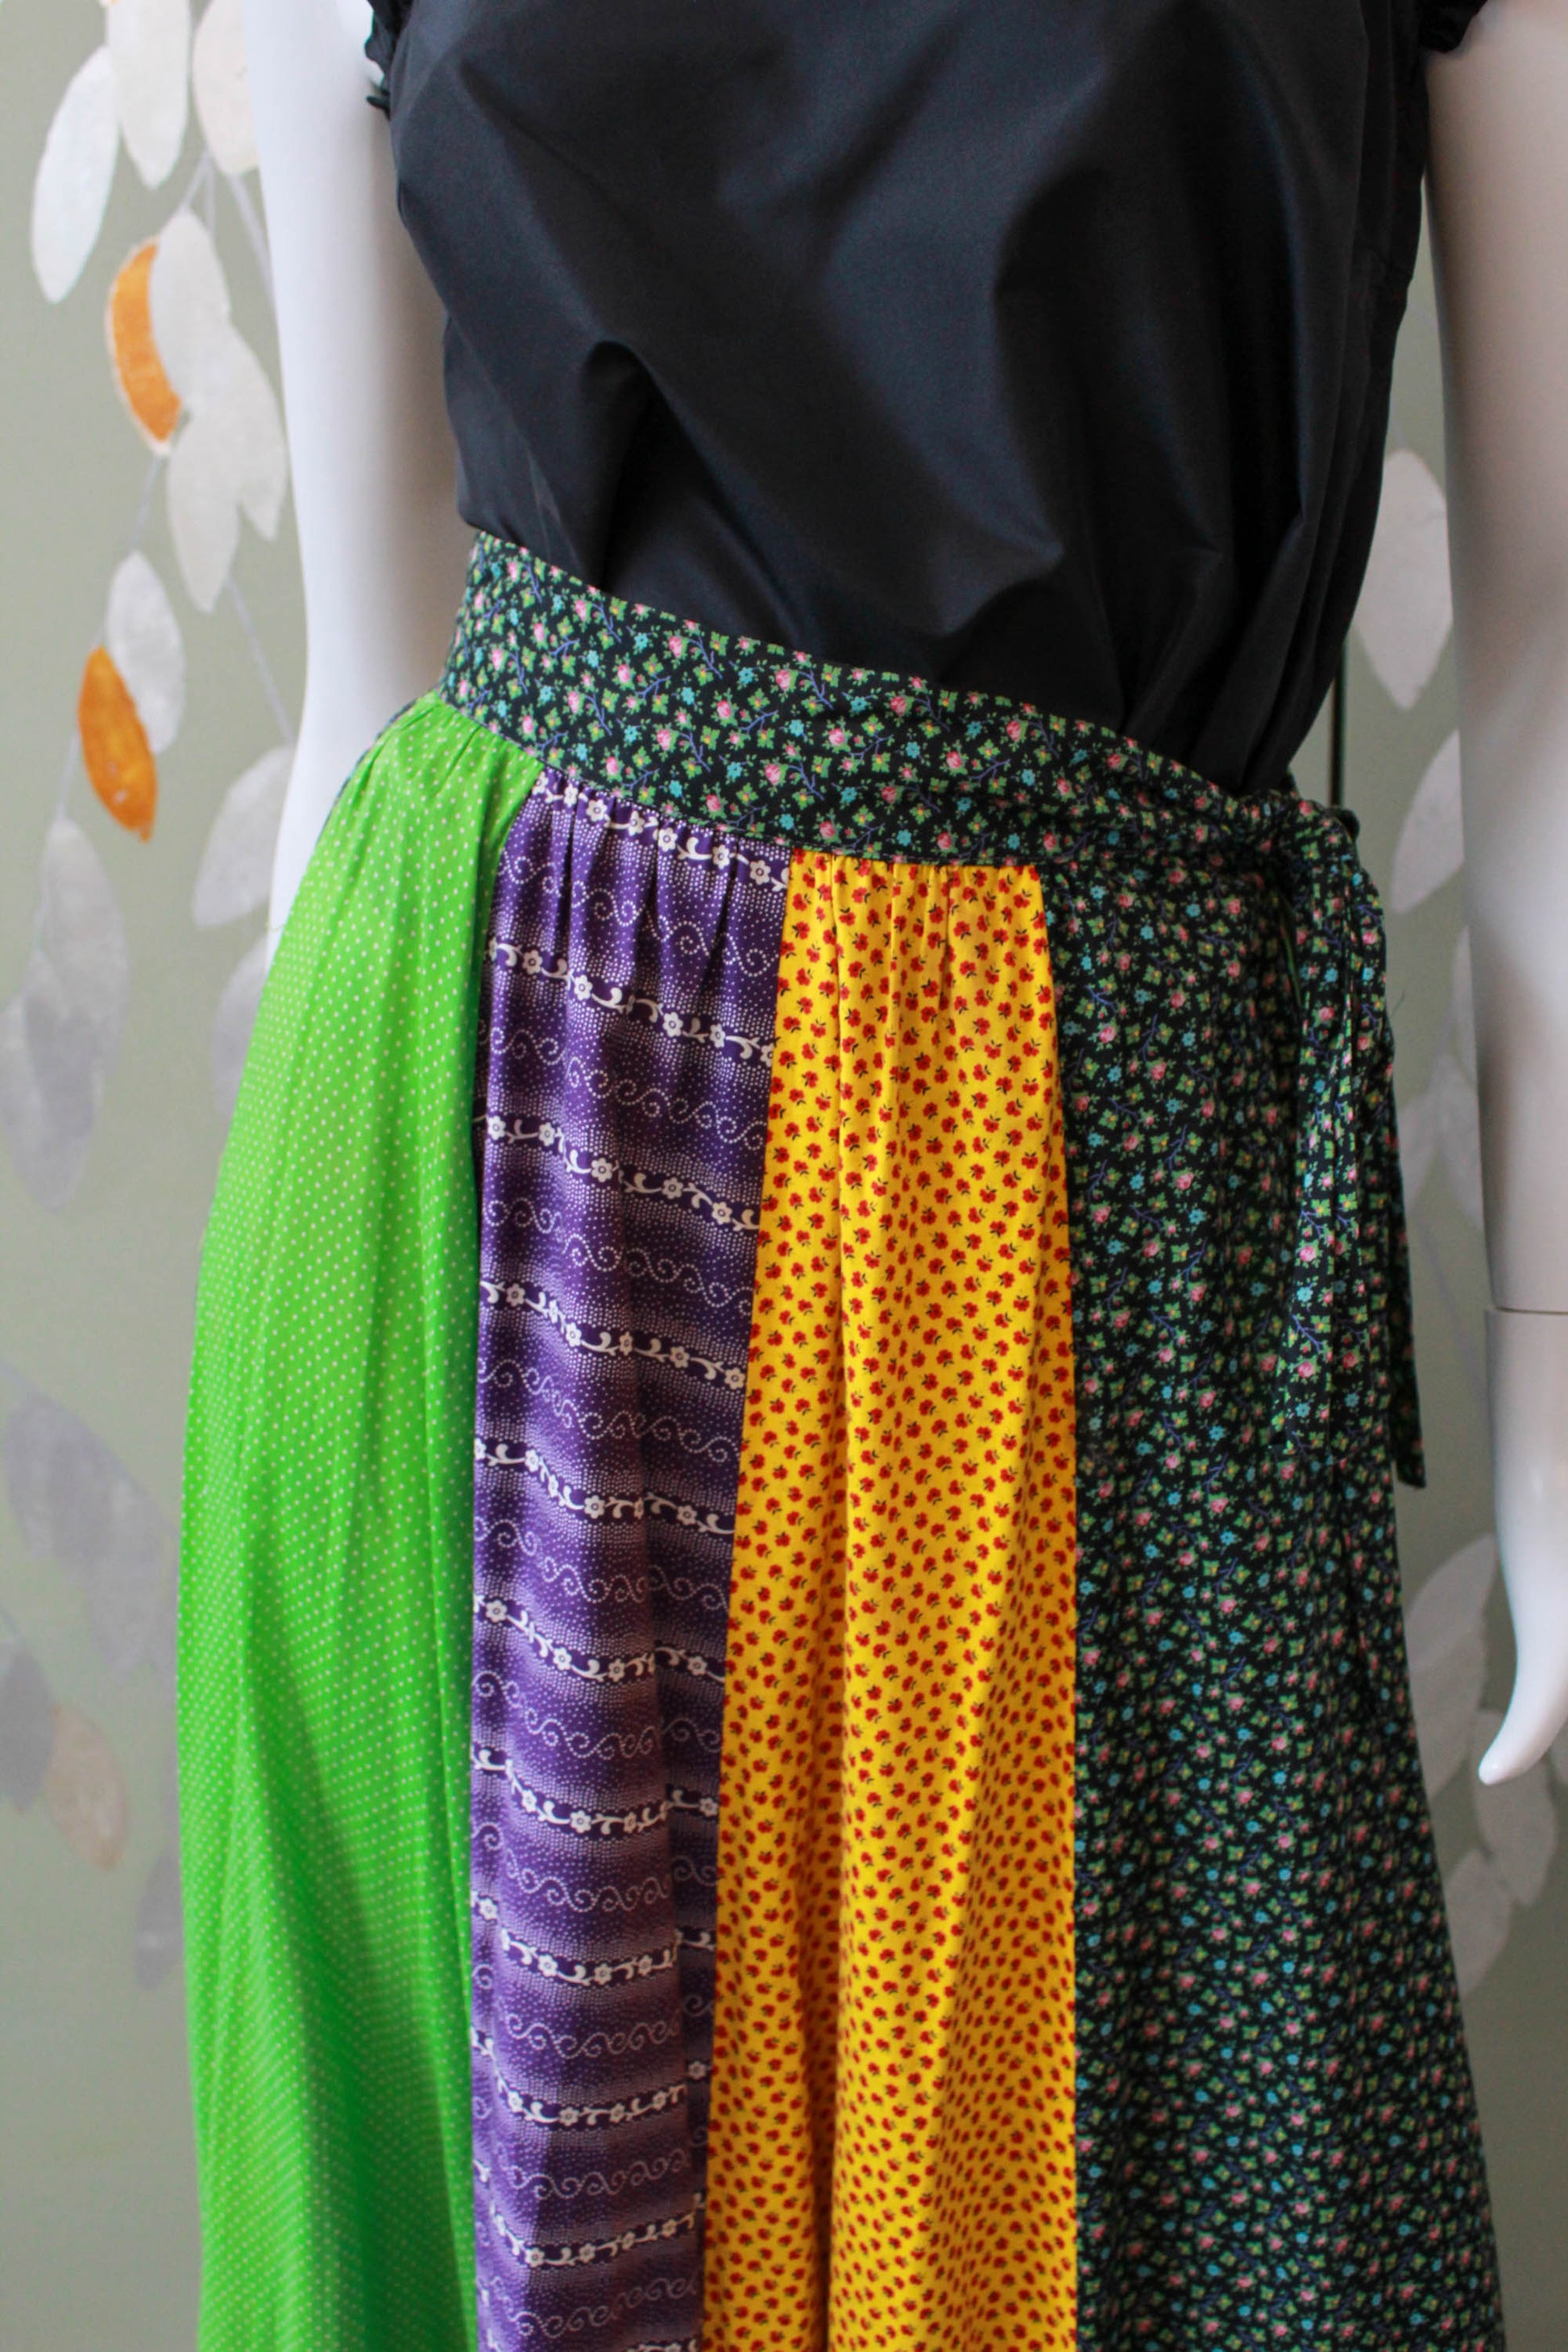 1970s patchwork floral print polka dot maxi skirt prairie skirt with ruffle hem, tie waist